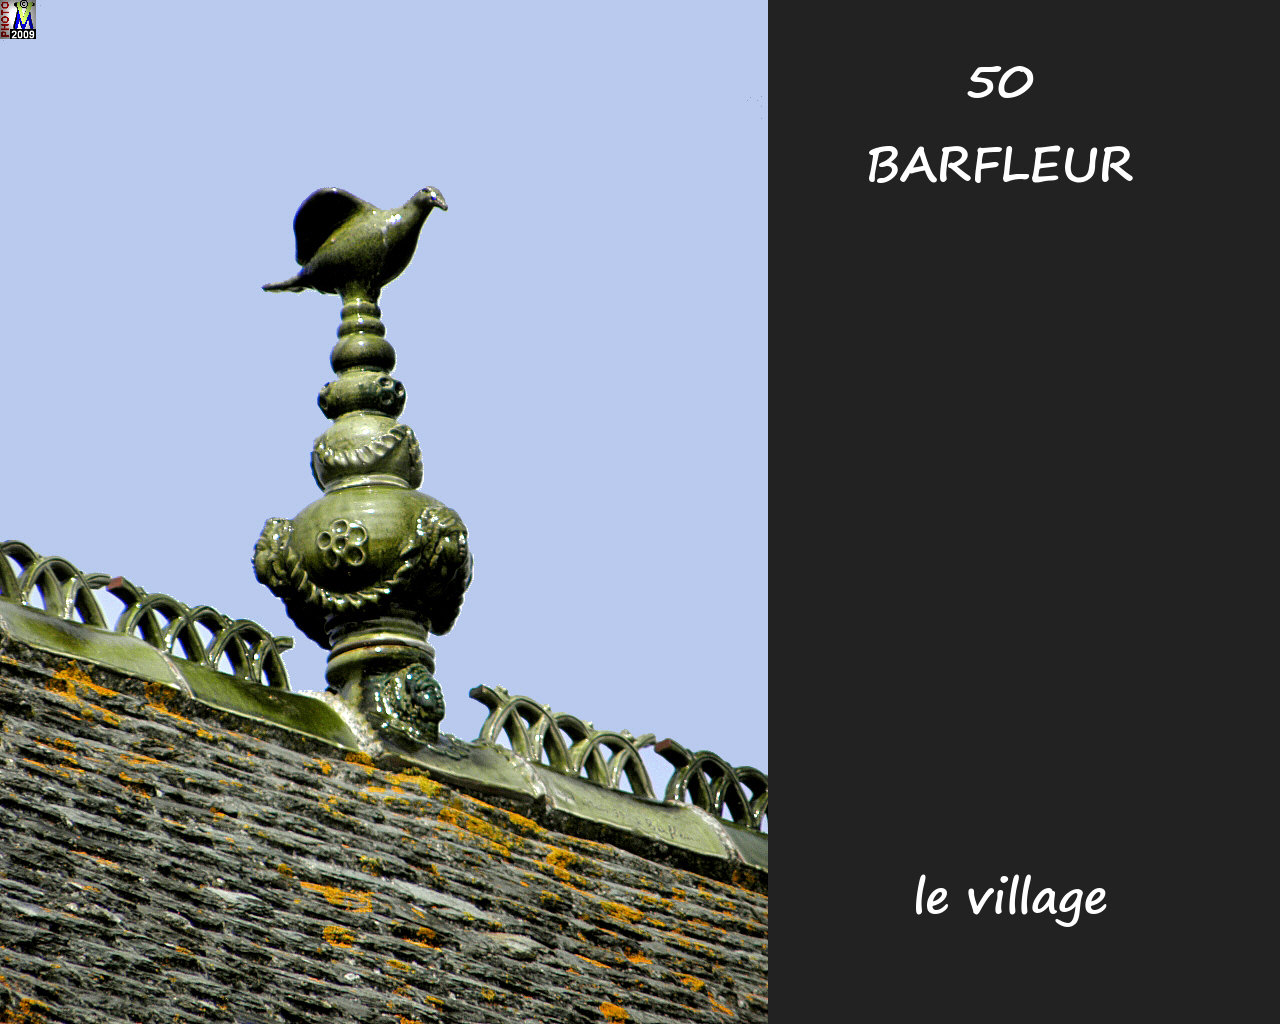 50BARFLEUR_village_112.jpg